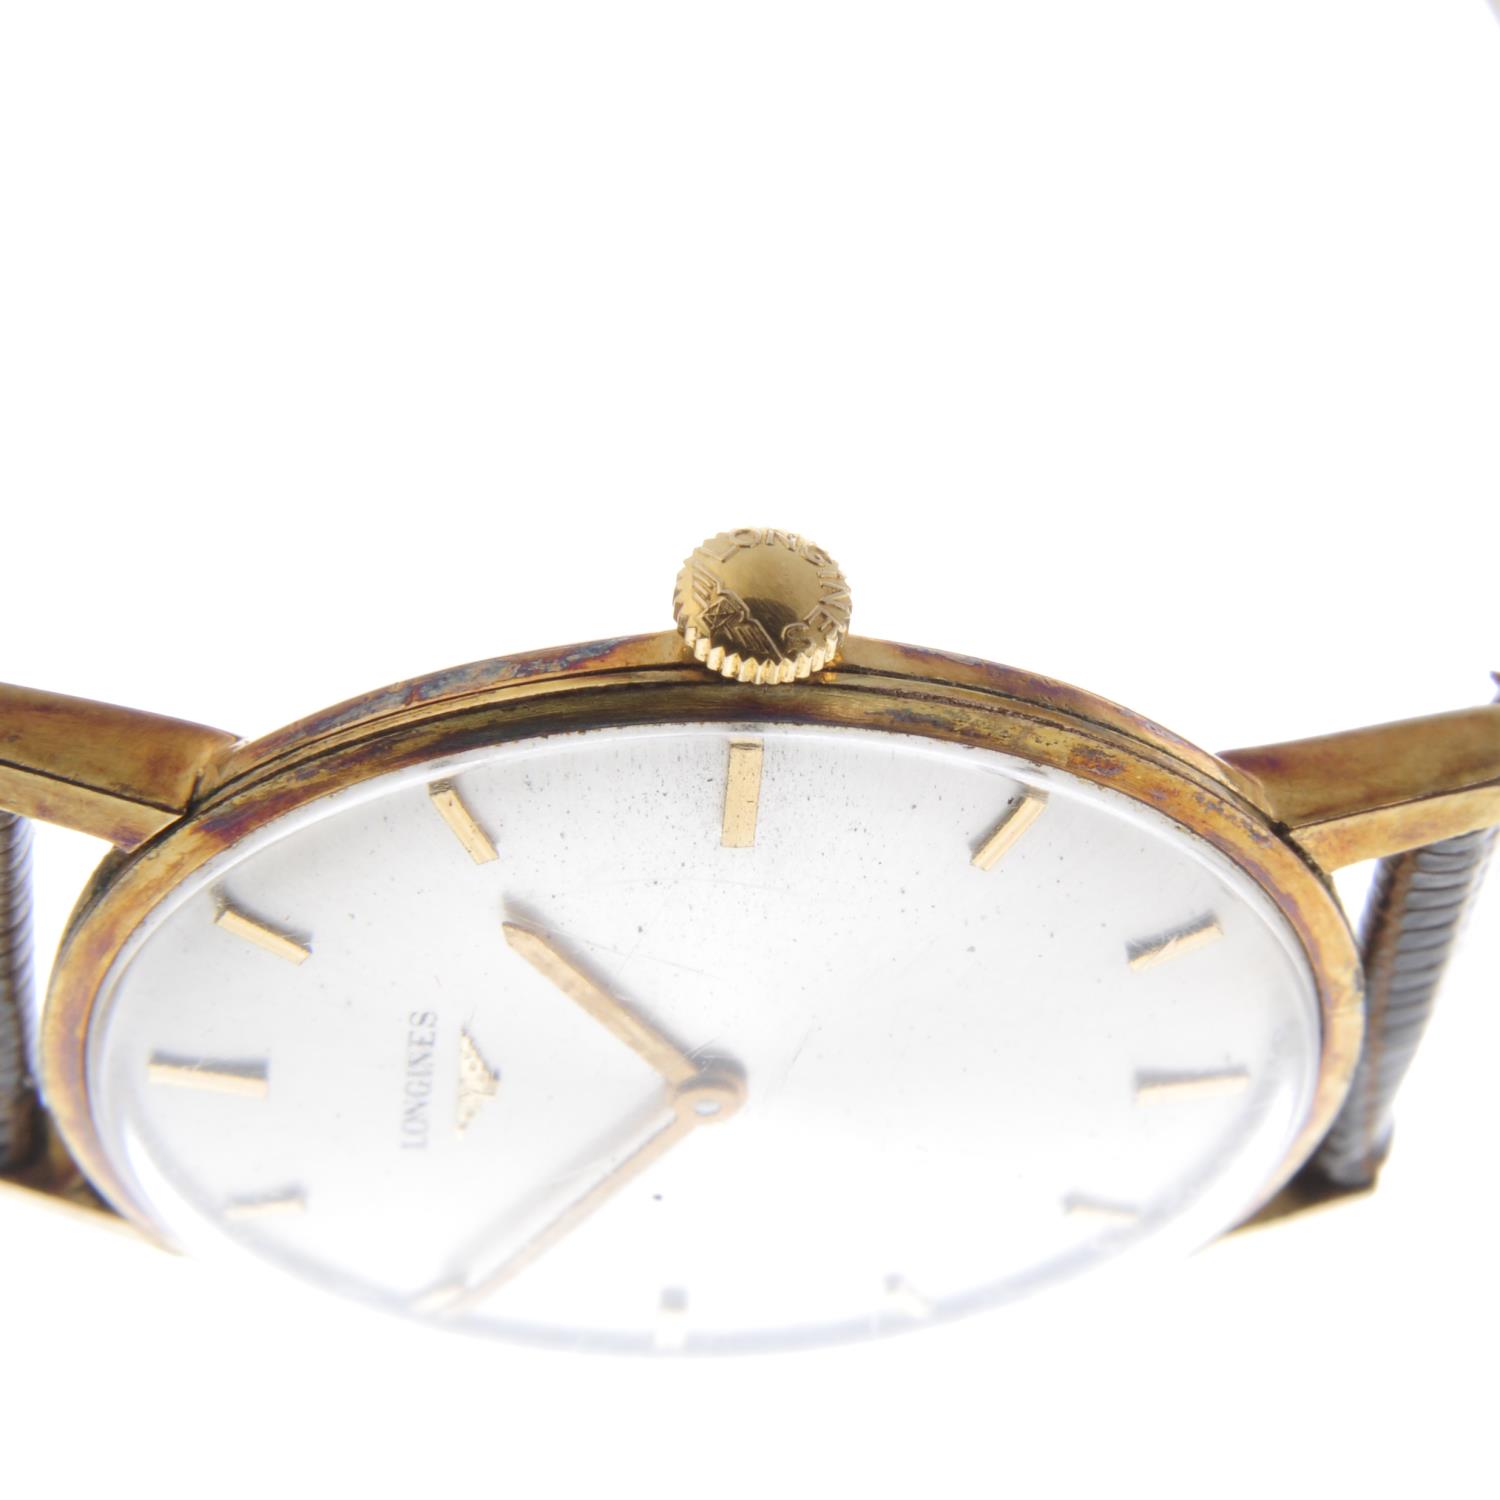 LONGINES - a gentleman's wrist watch. - Image 4 of 4